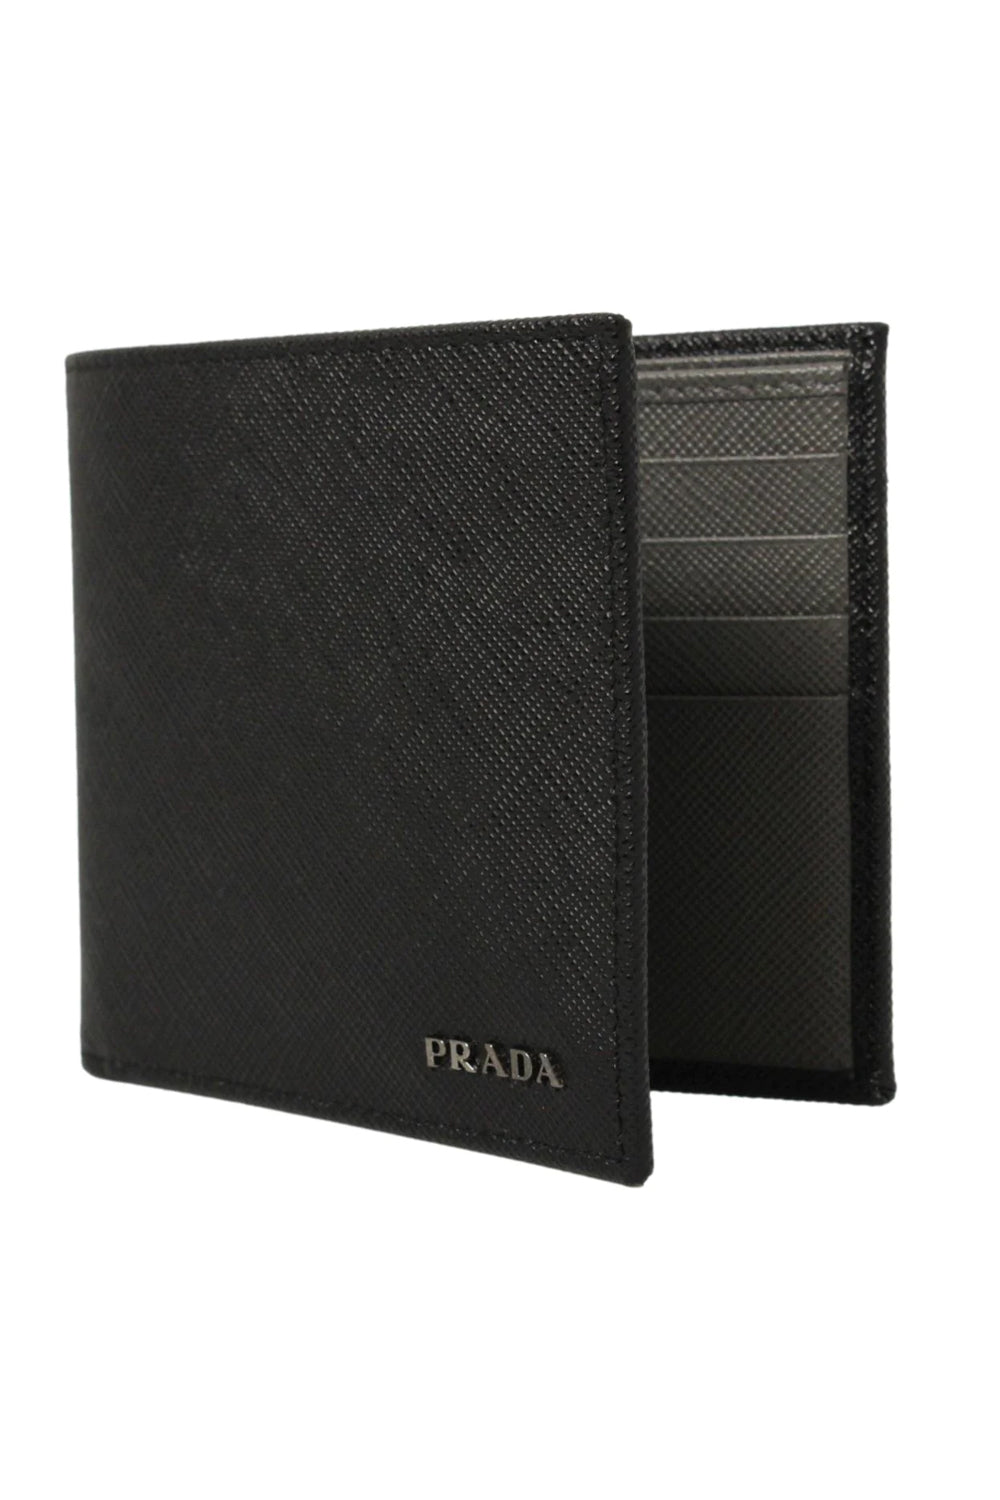 Prada Nero Saffiano Cuir Leather Billfold Wallet